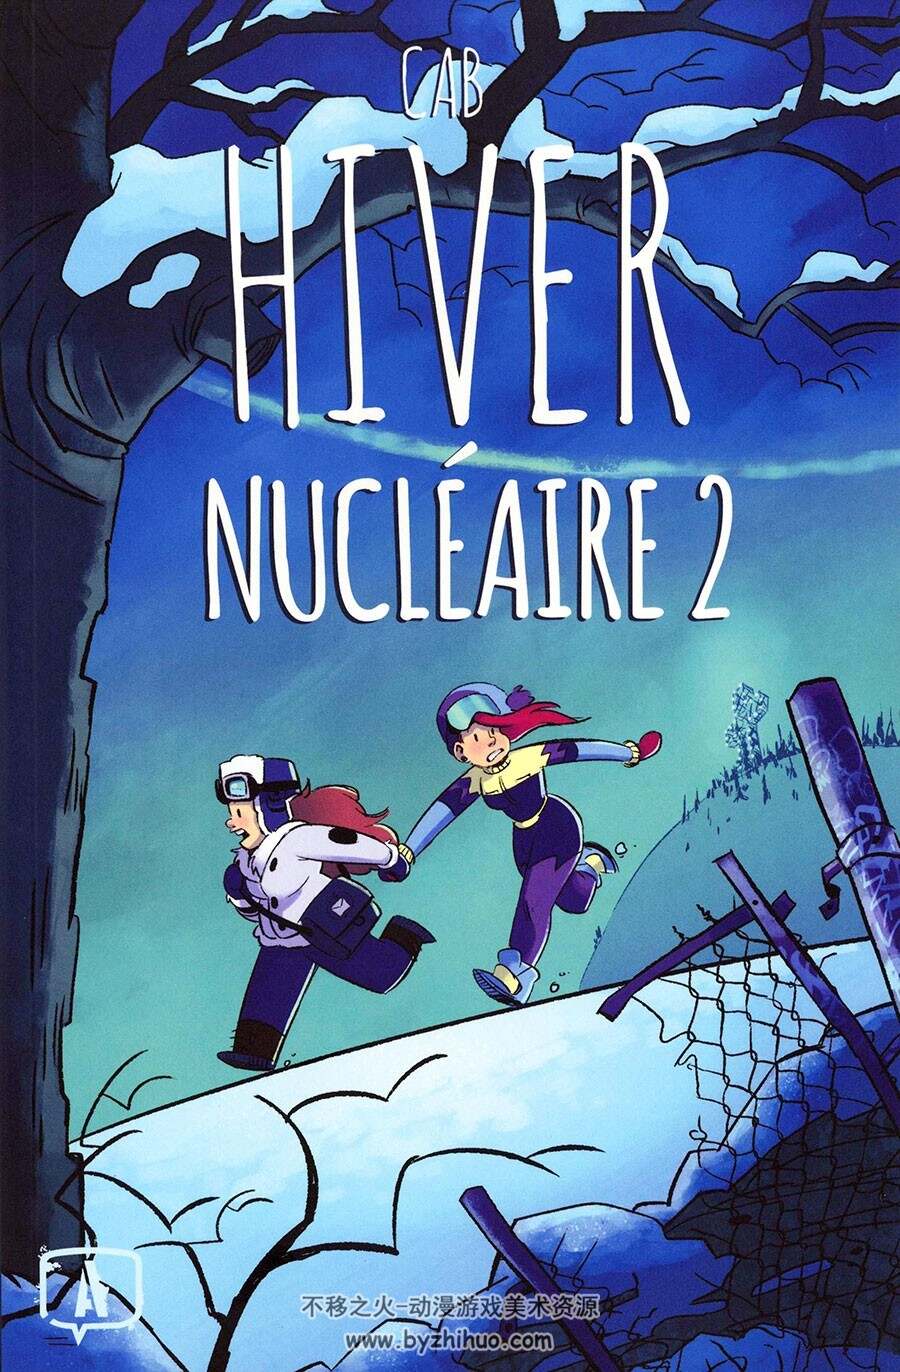 Hiver Nucleaire  第2册 WAVERLY 彩色卡通法语欧美漫画